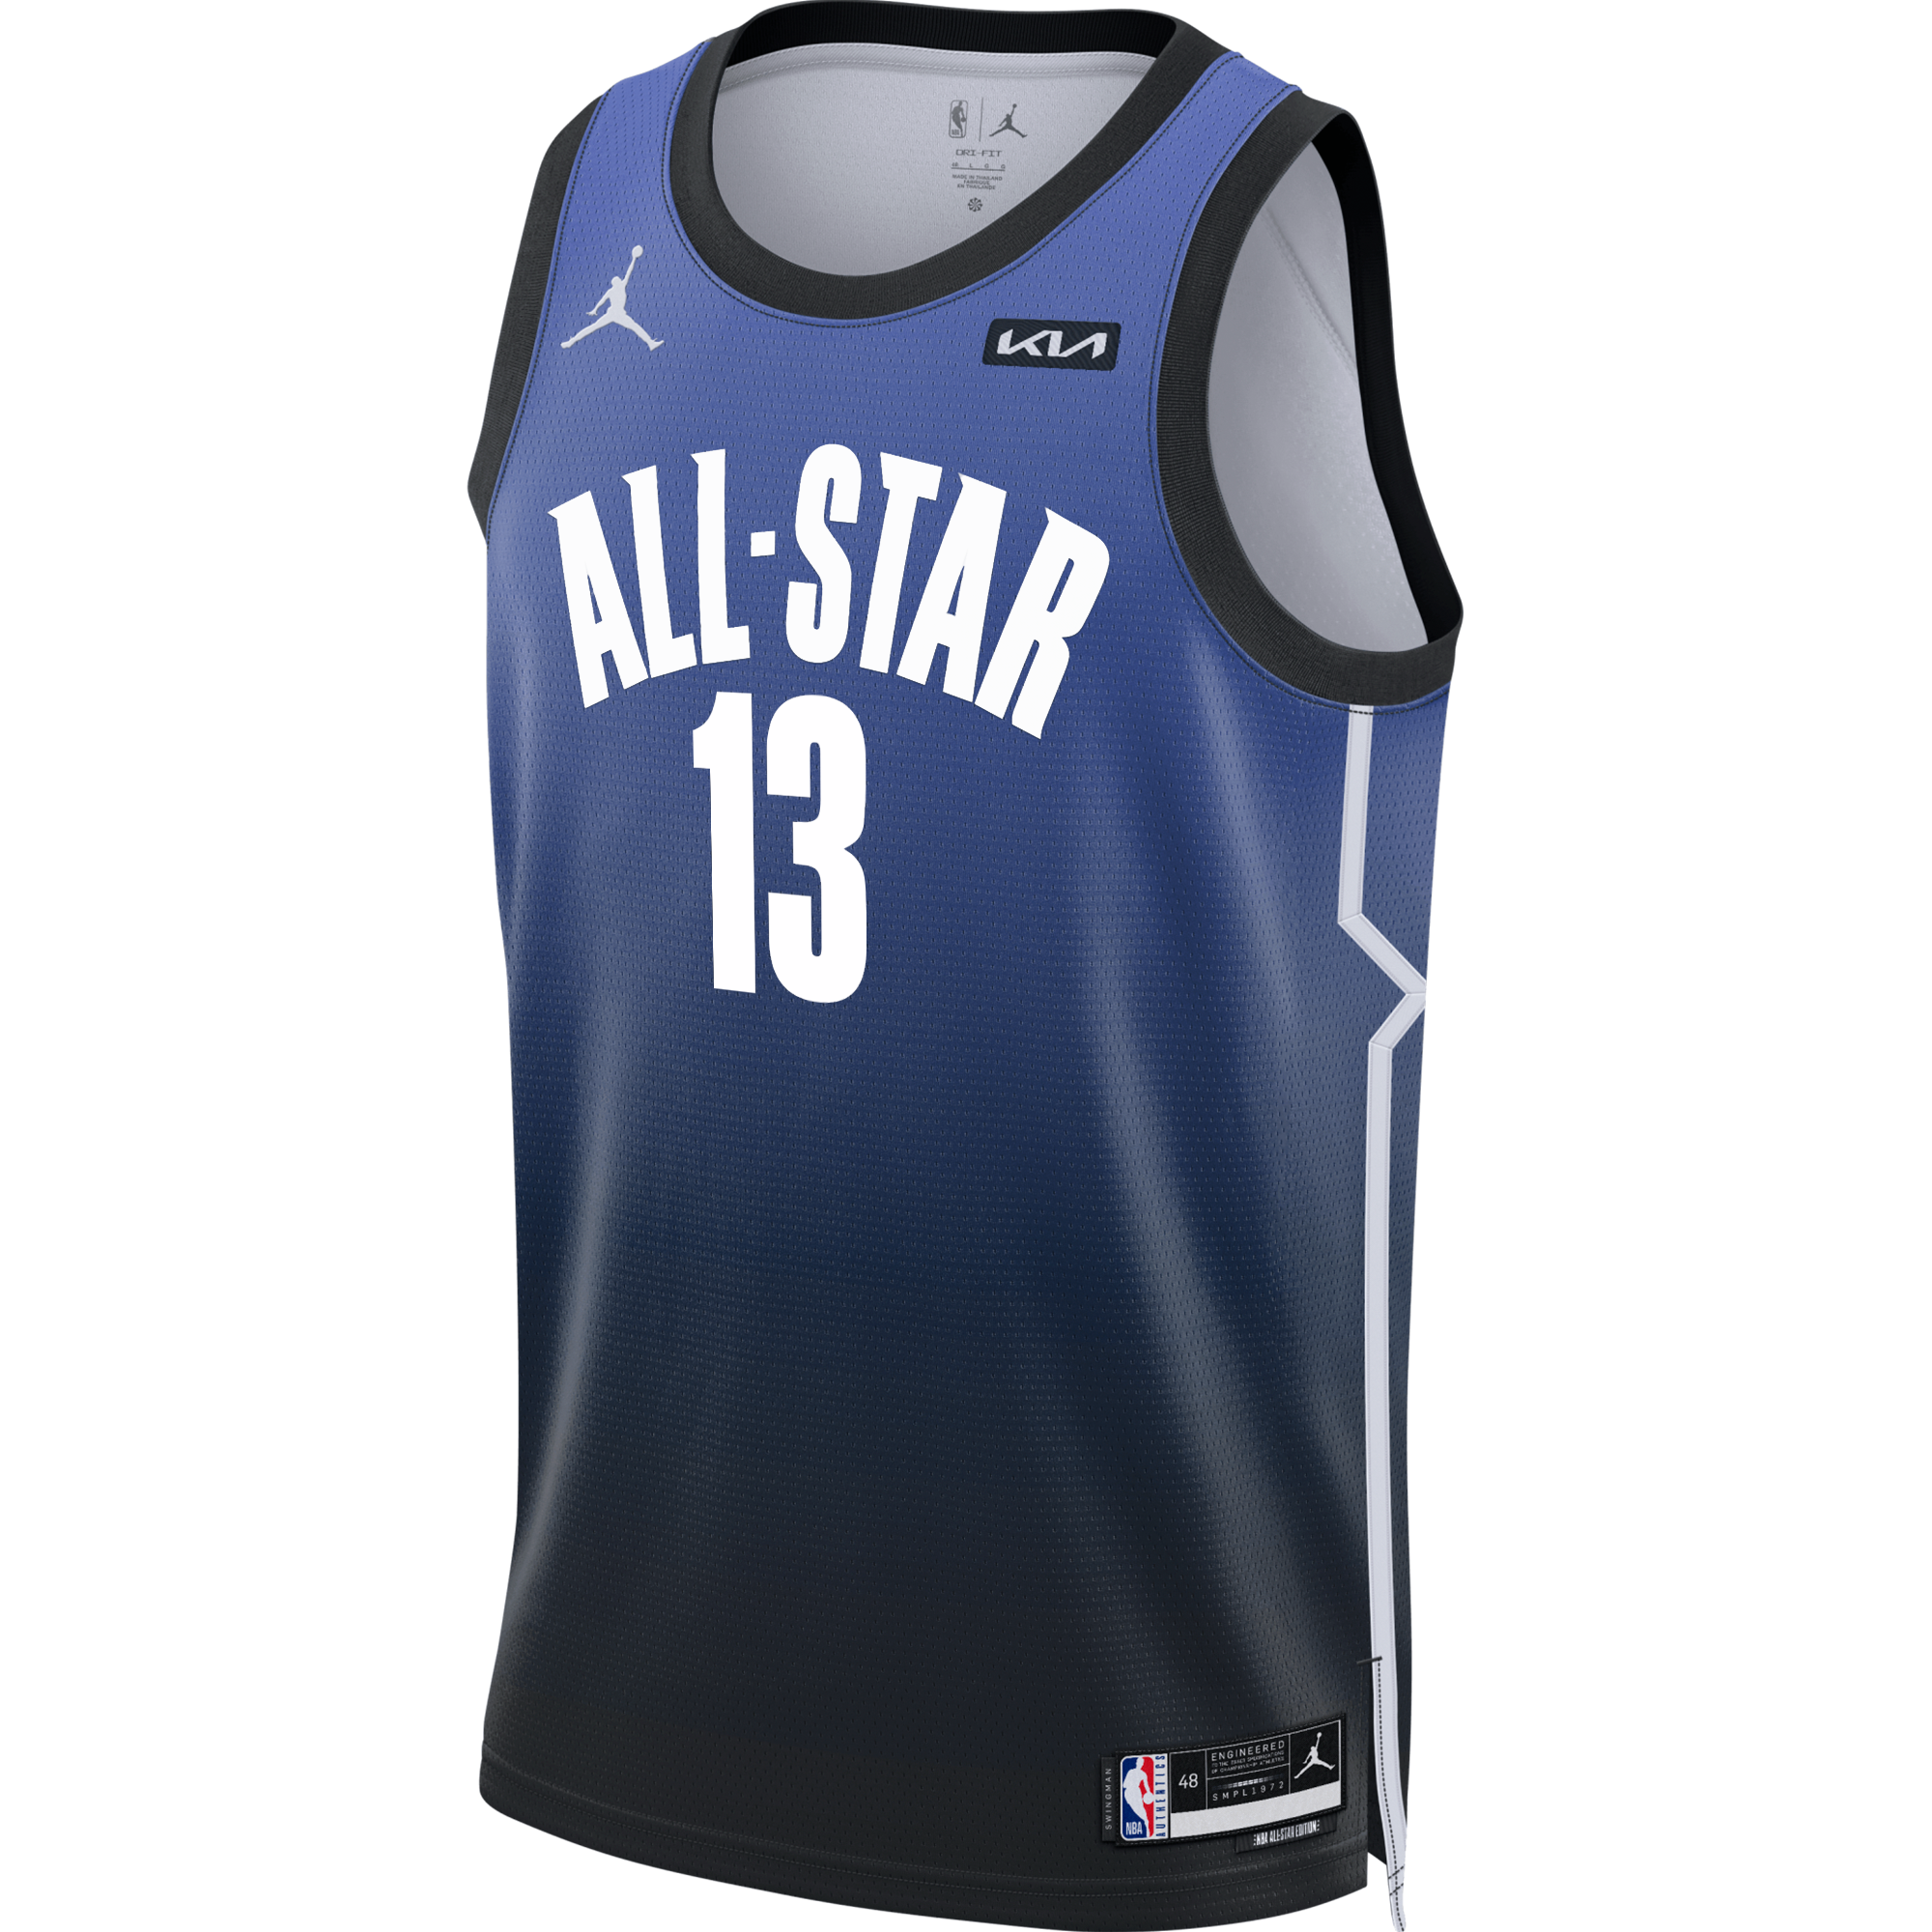 Nike Tyler Herro Miami Heat Vice City 2020 Swingman NBA Jersey Blue Pink 52  XL